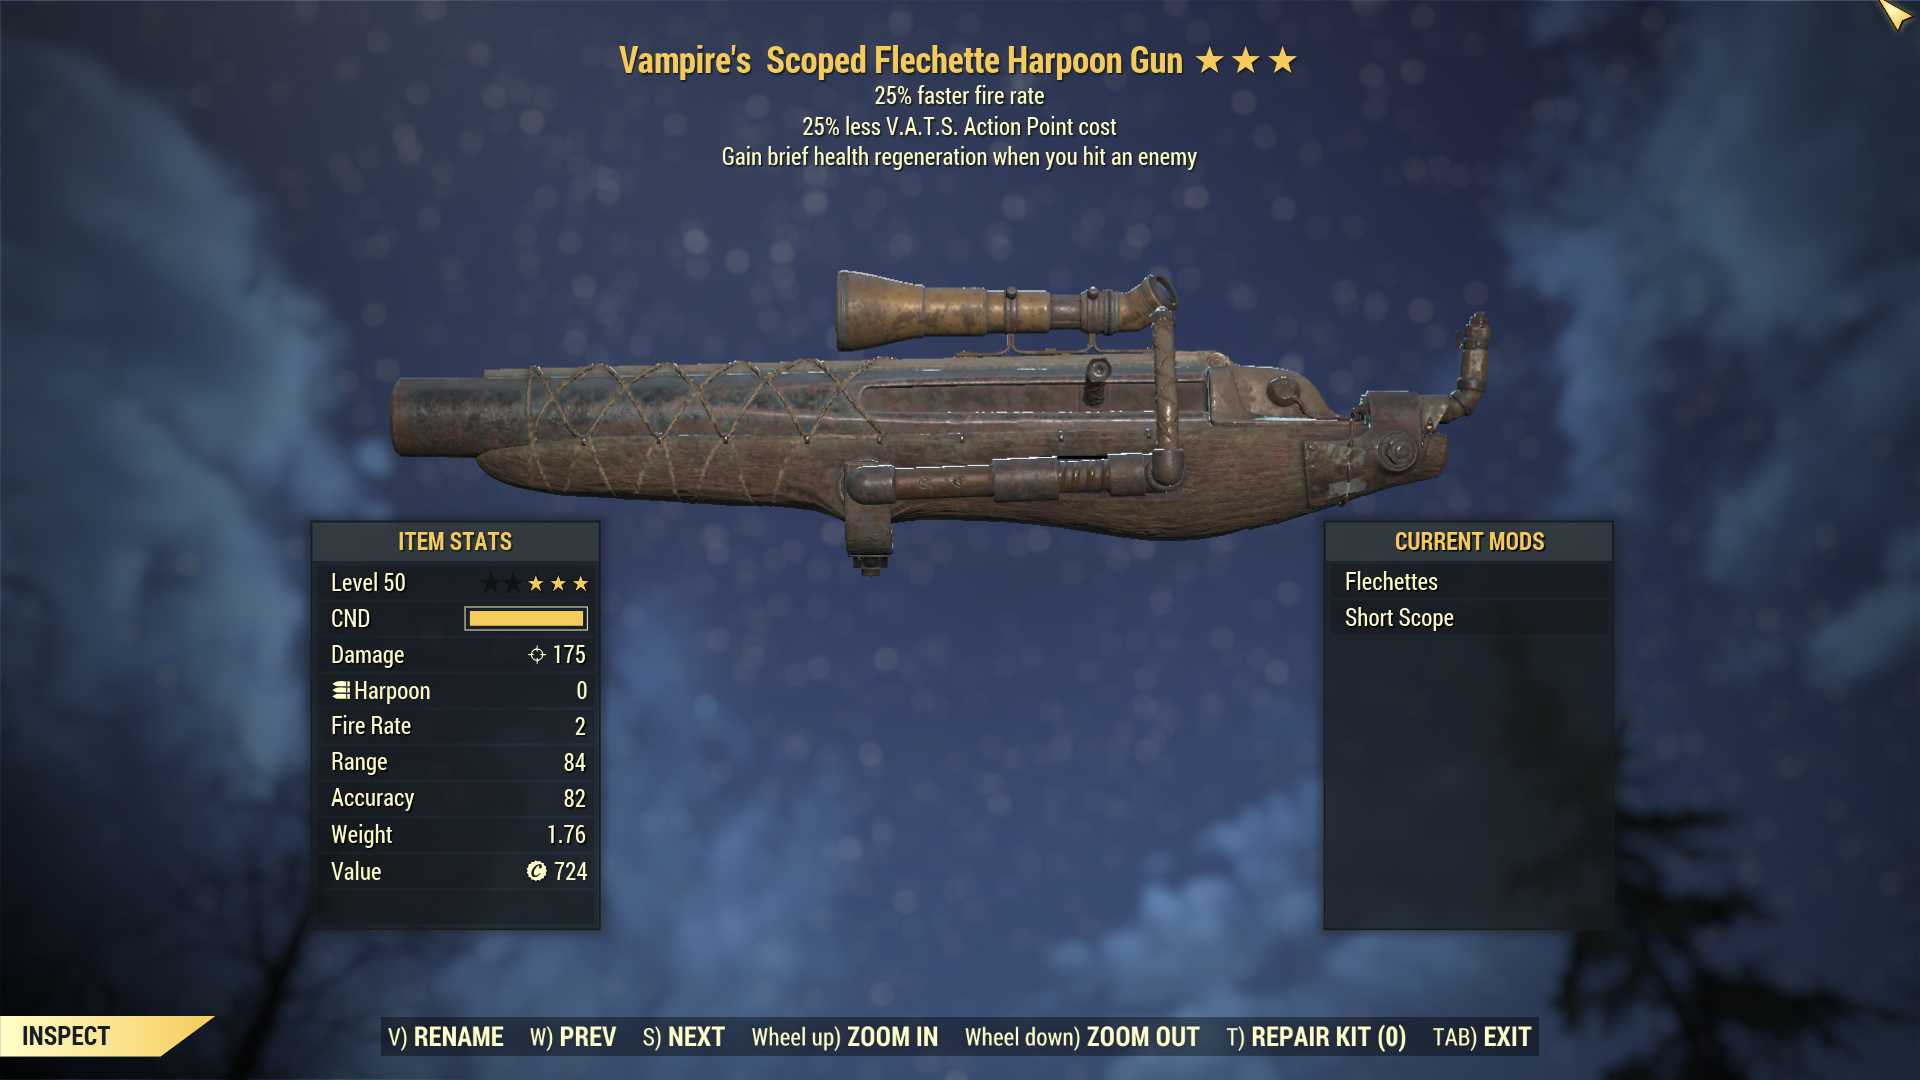 Vampire's Harpoon Gun (25% faster fire rate, 25% less VATS AP cost)